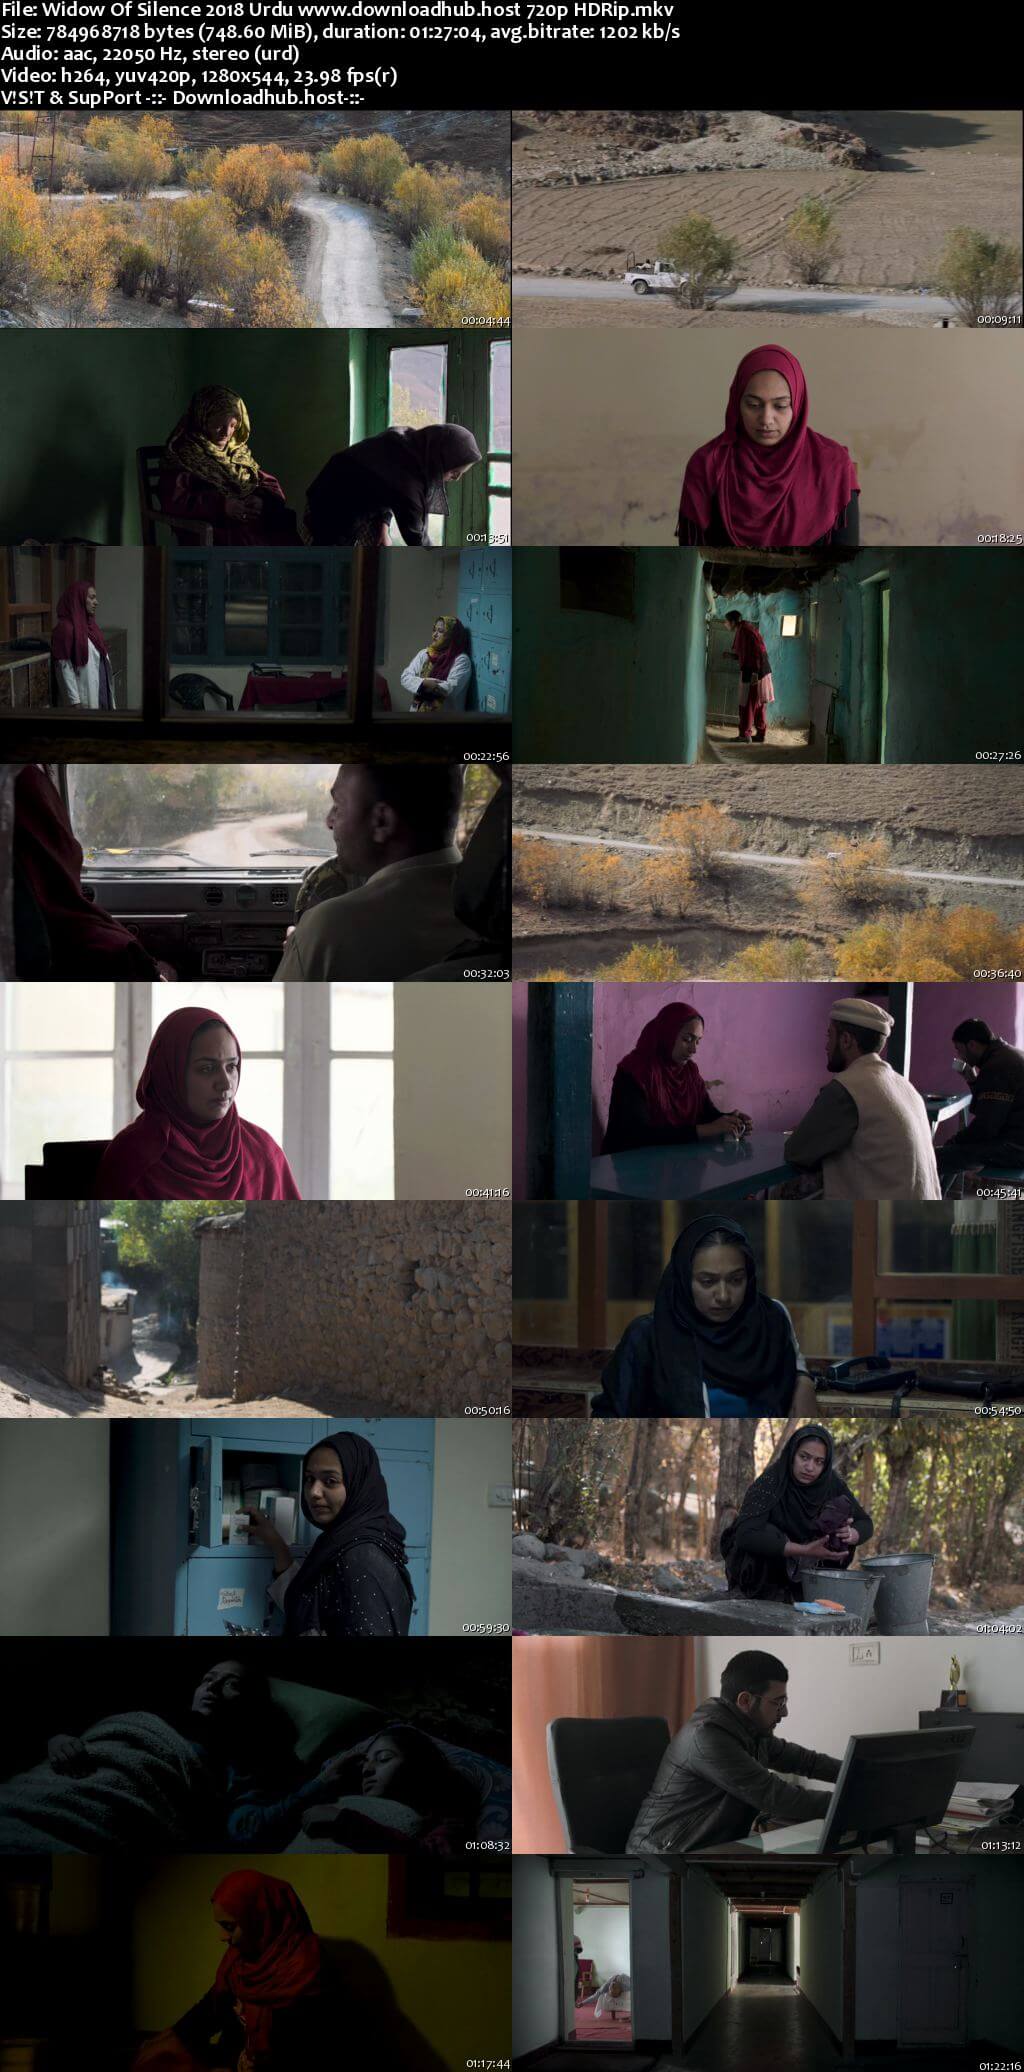 Widow of Silence 2018 Urdu 720p HDRip x264